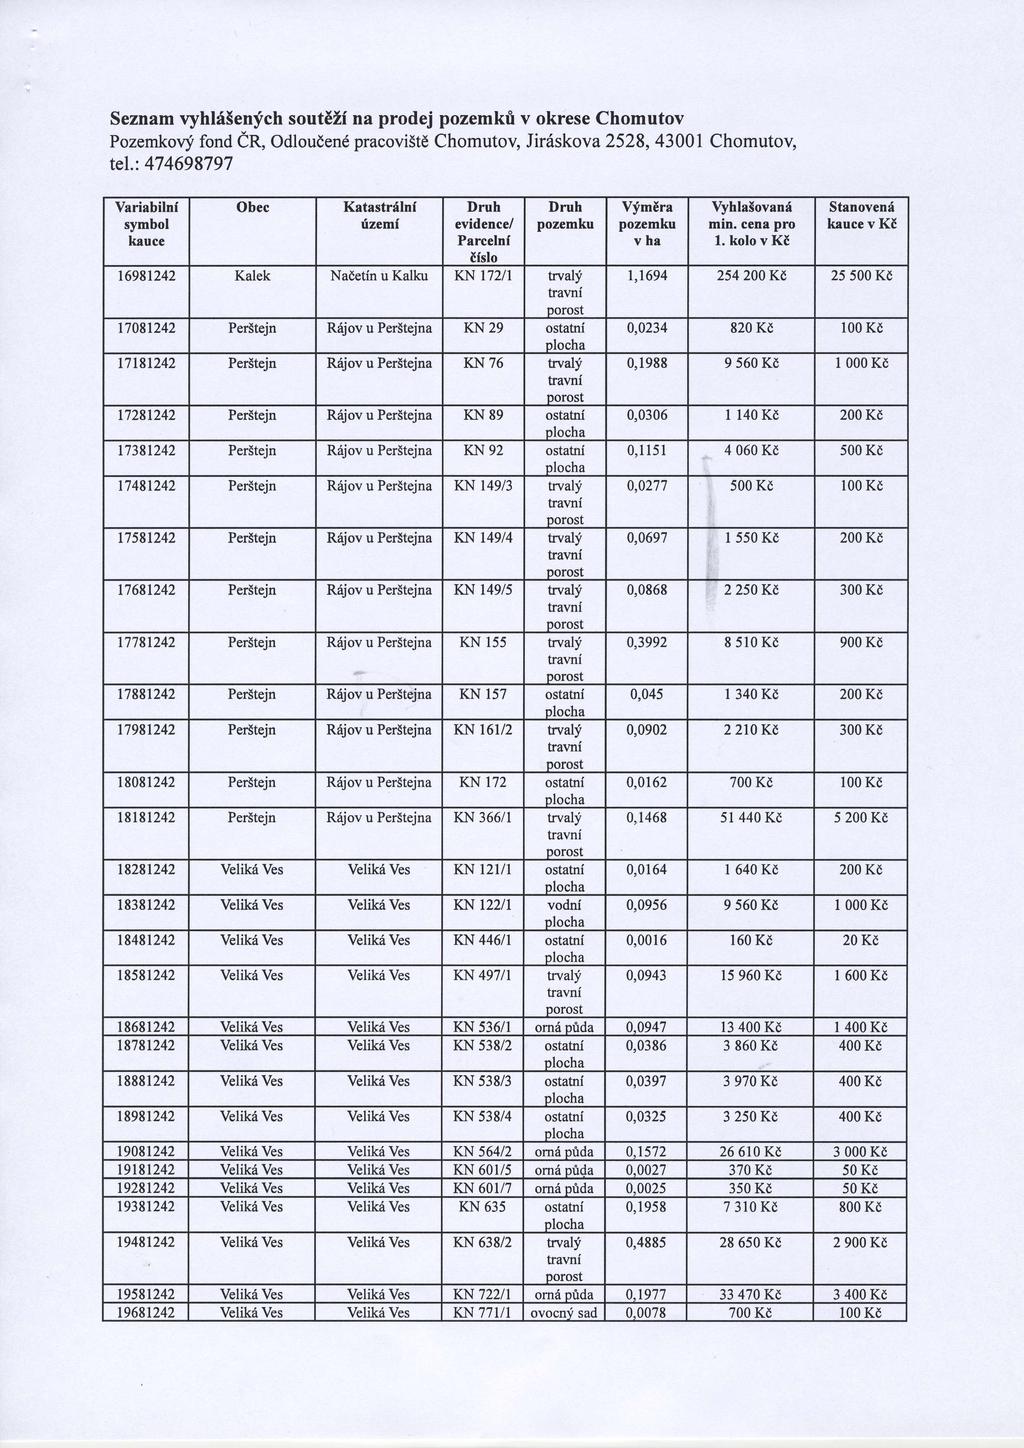 Seznam vyhldsenfch sout6zf na prodej pozemkrl v okrese Chomutov Pozemkovf fond i& Odloudend pracovi5te Chomutov, Jir6skova 2528,43001 Chomutov, tel.